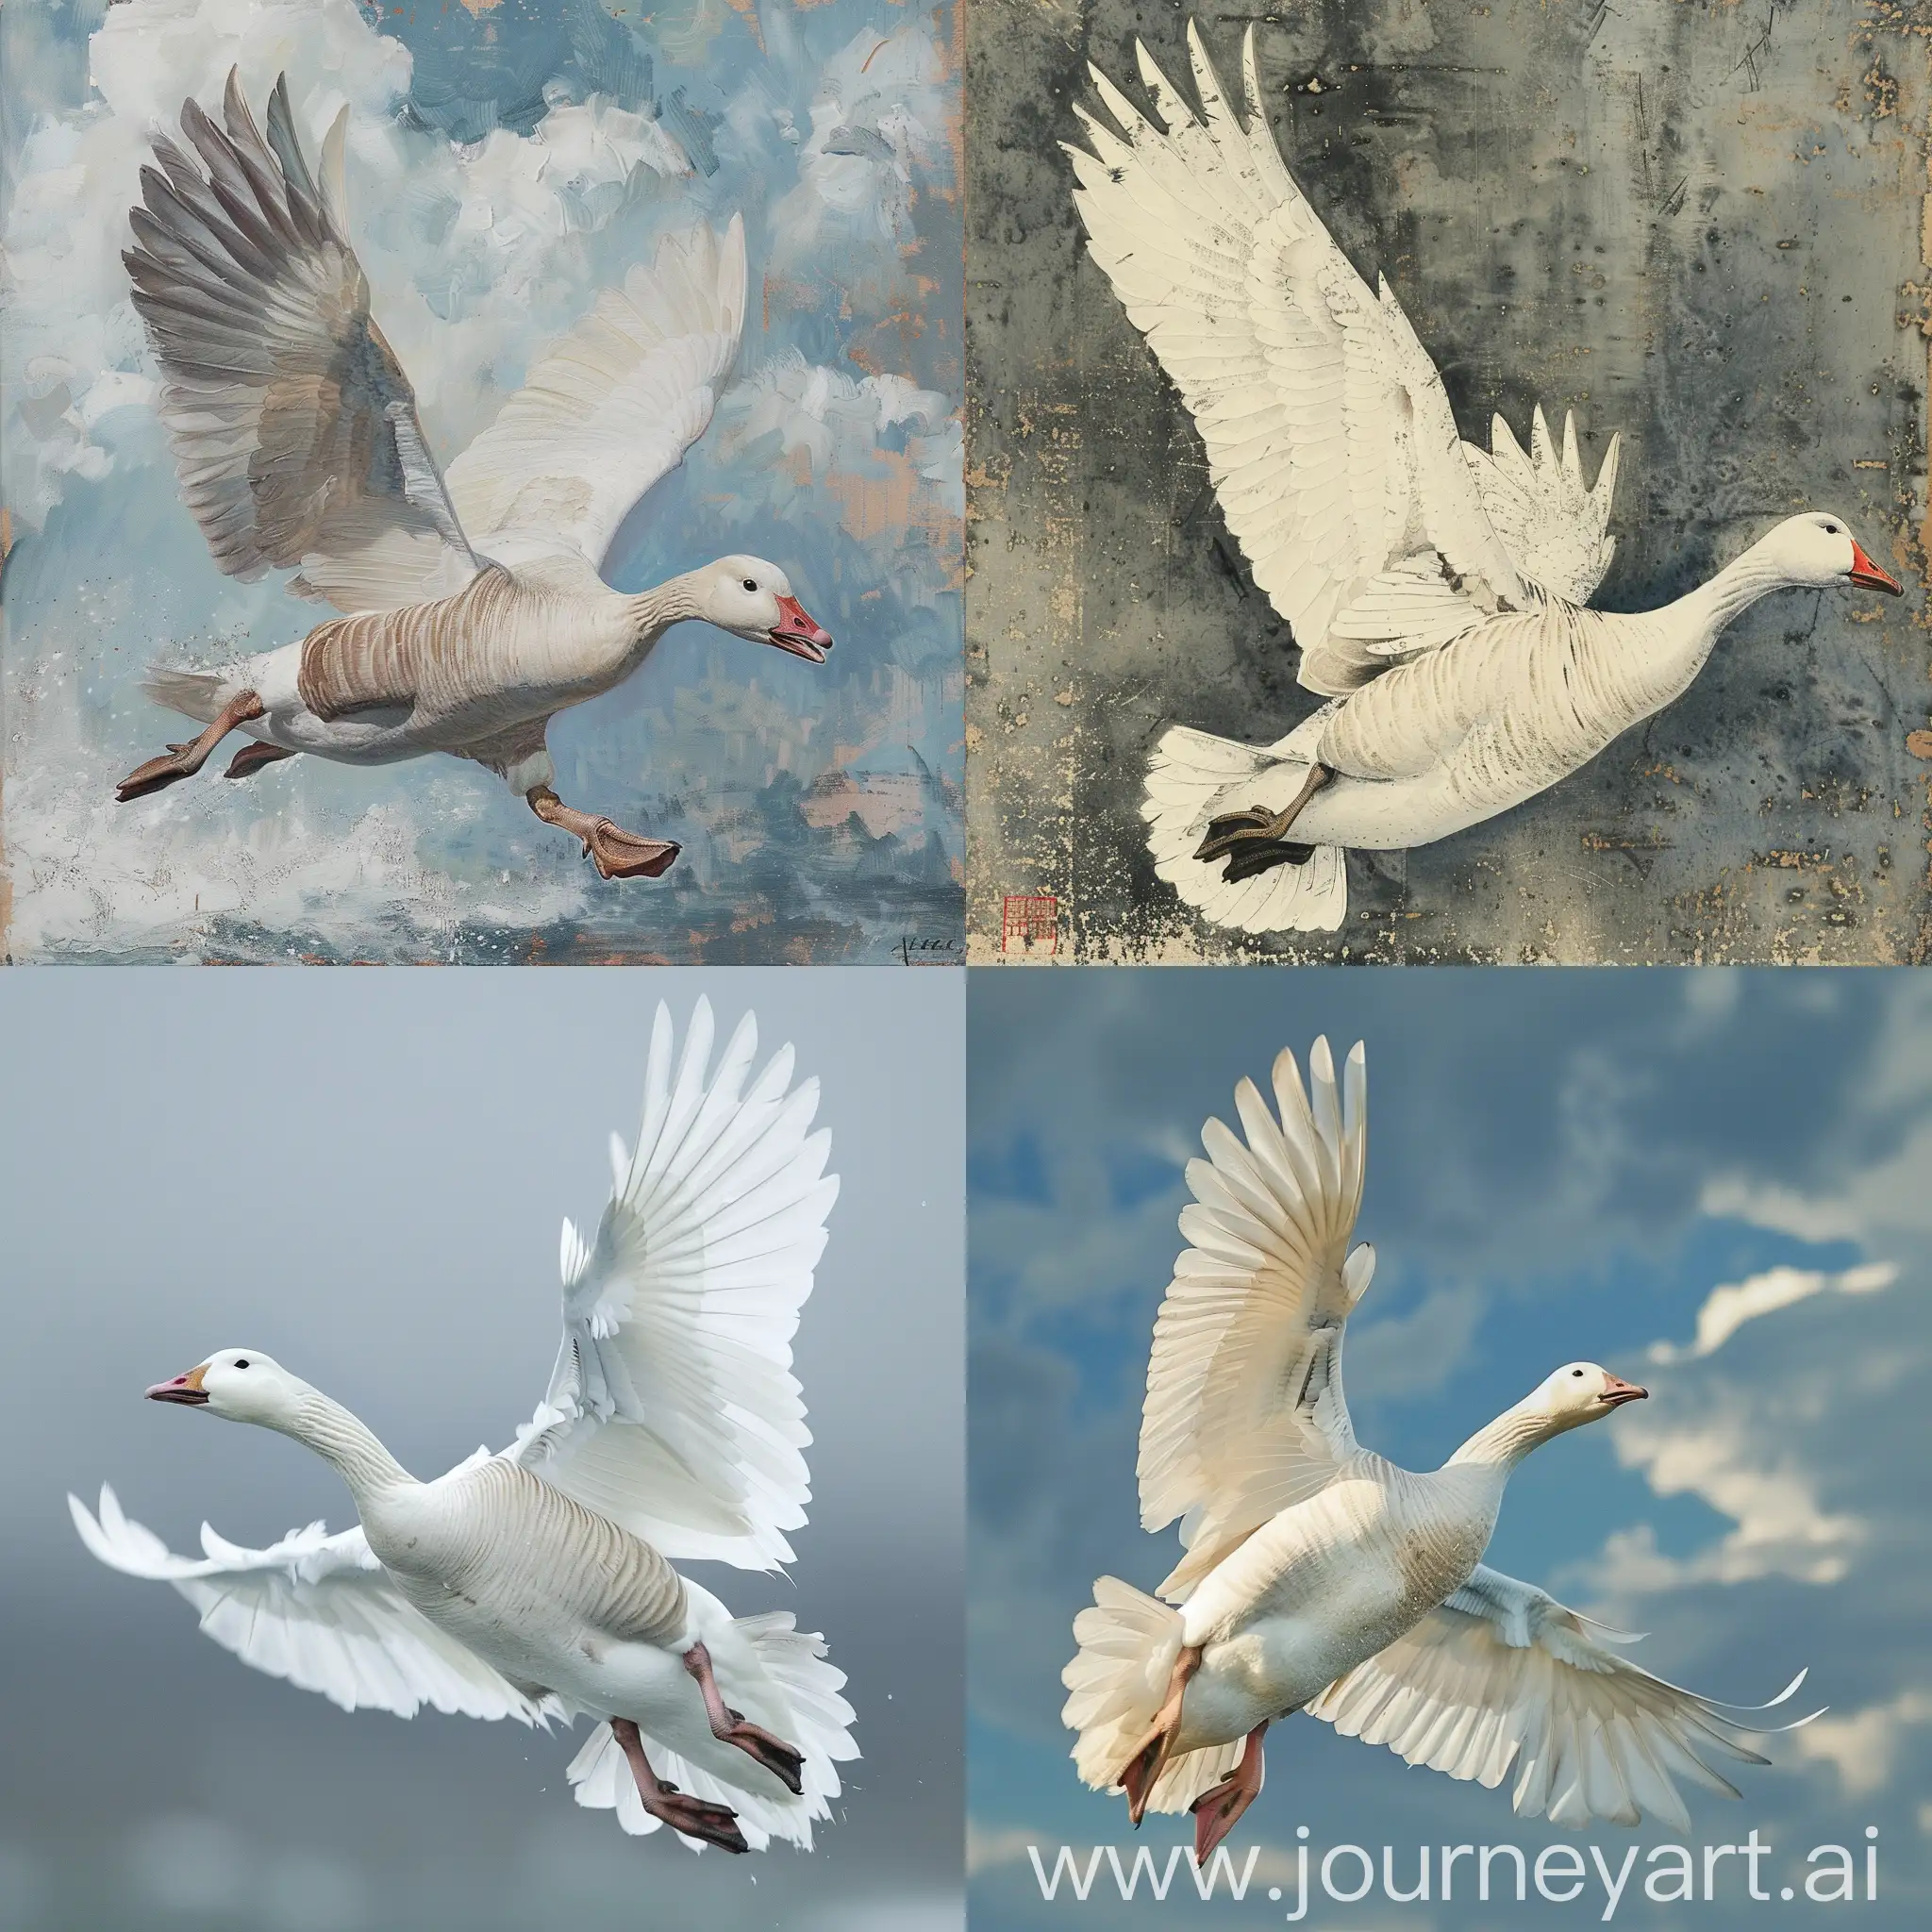 Majestic-Snowy-Goose-Takes-Flight-in-the-Wintry-Sky